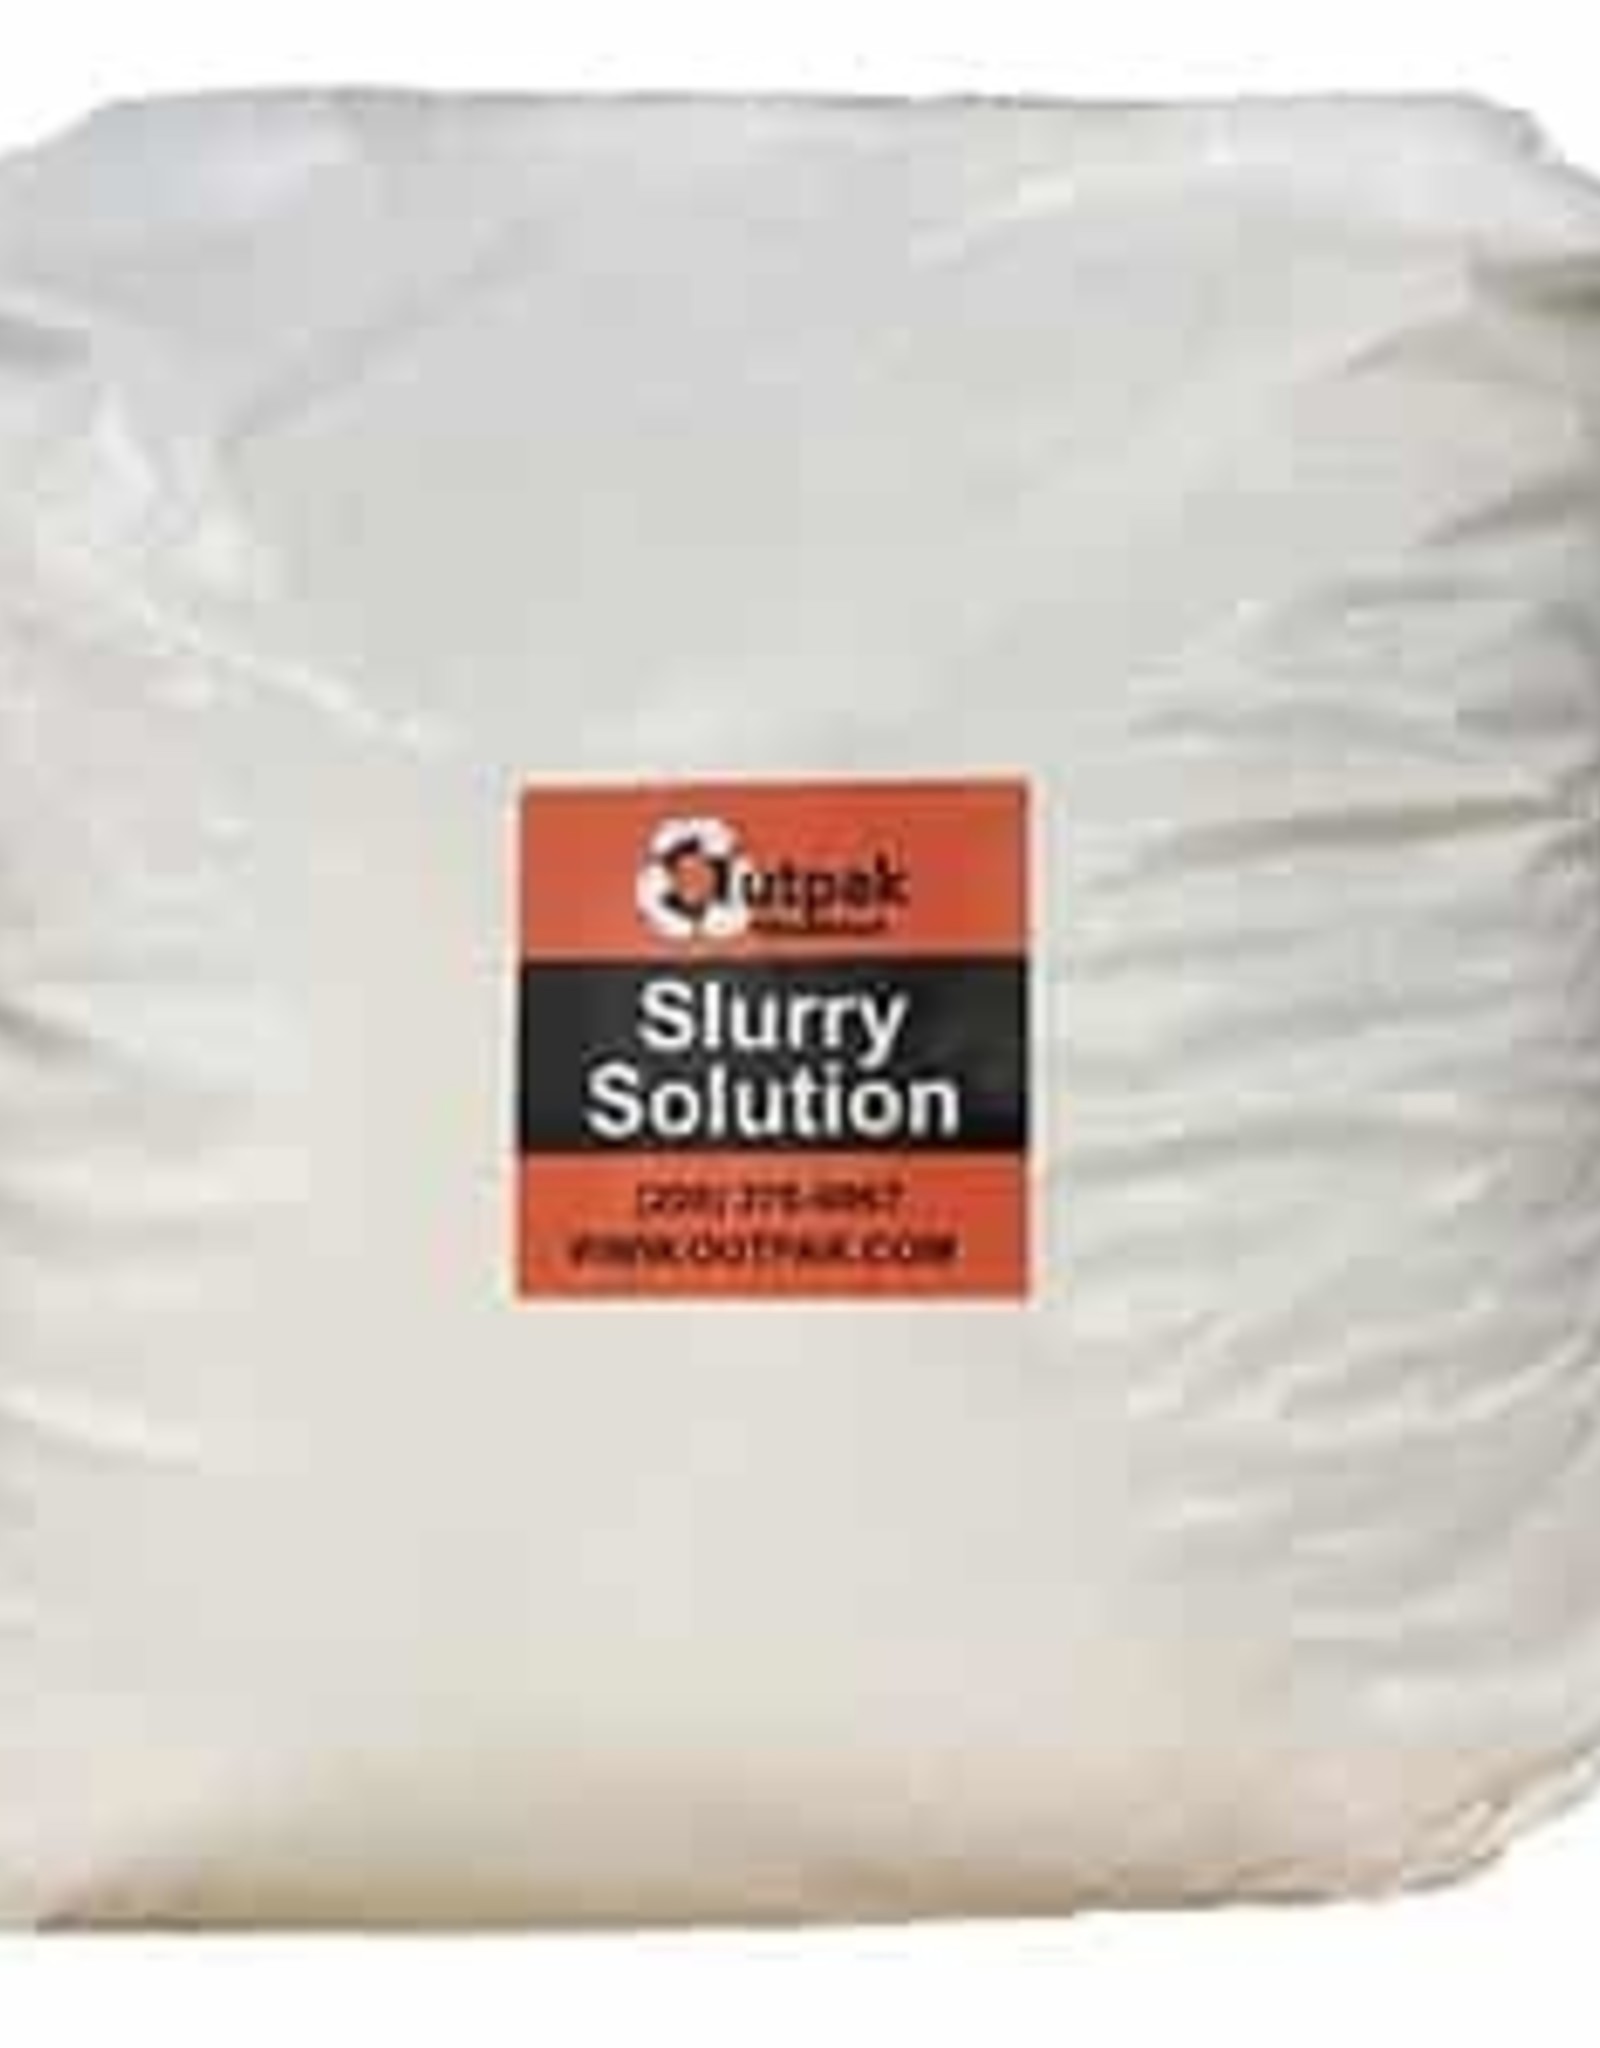 Slurry Solution, 50 Lb. Bag in a Box